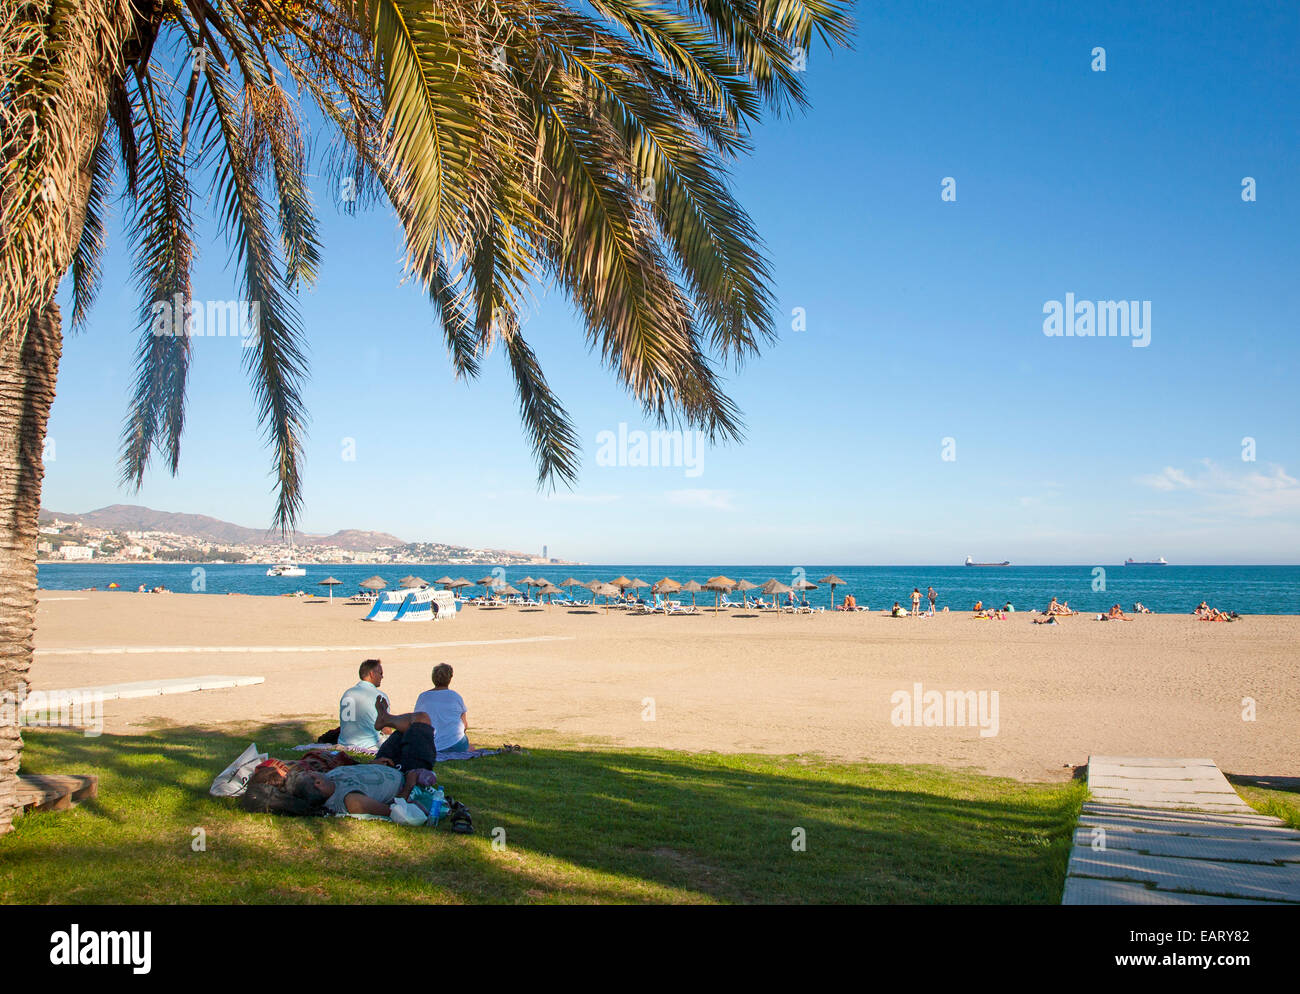 Playa de Malagueta spiaggia sabbiosa, Malaga, Spagna Foto Stock